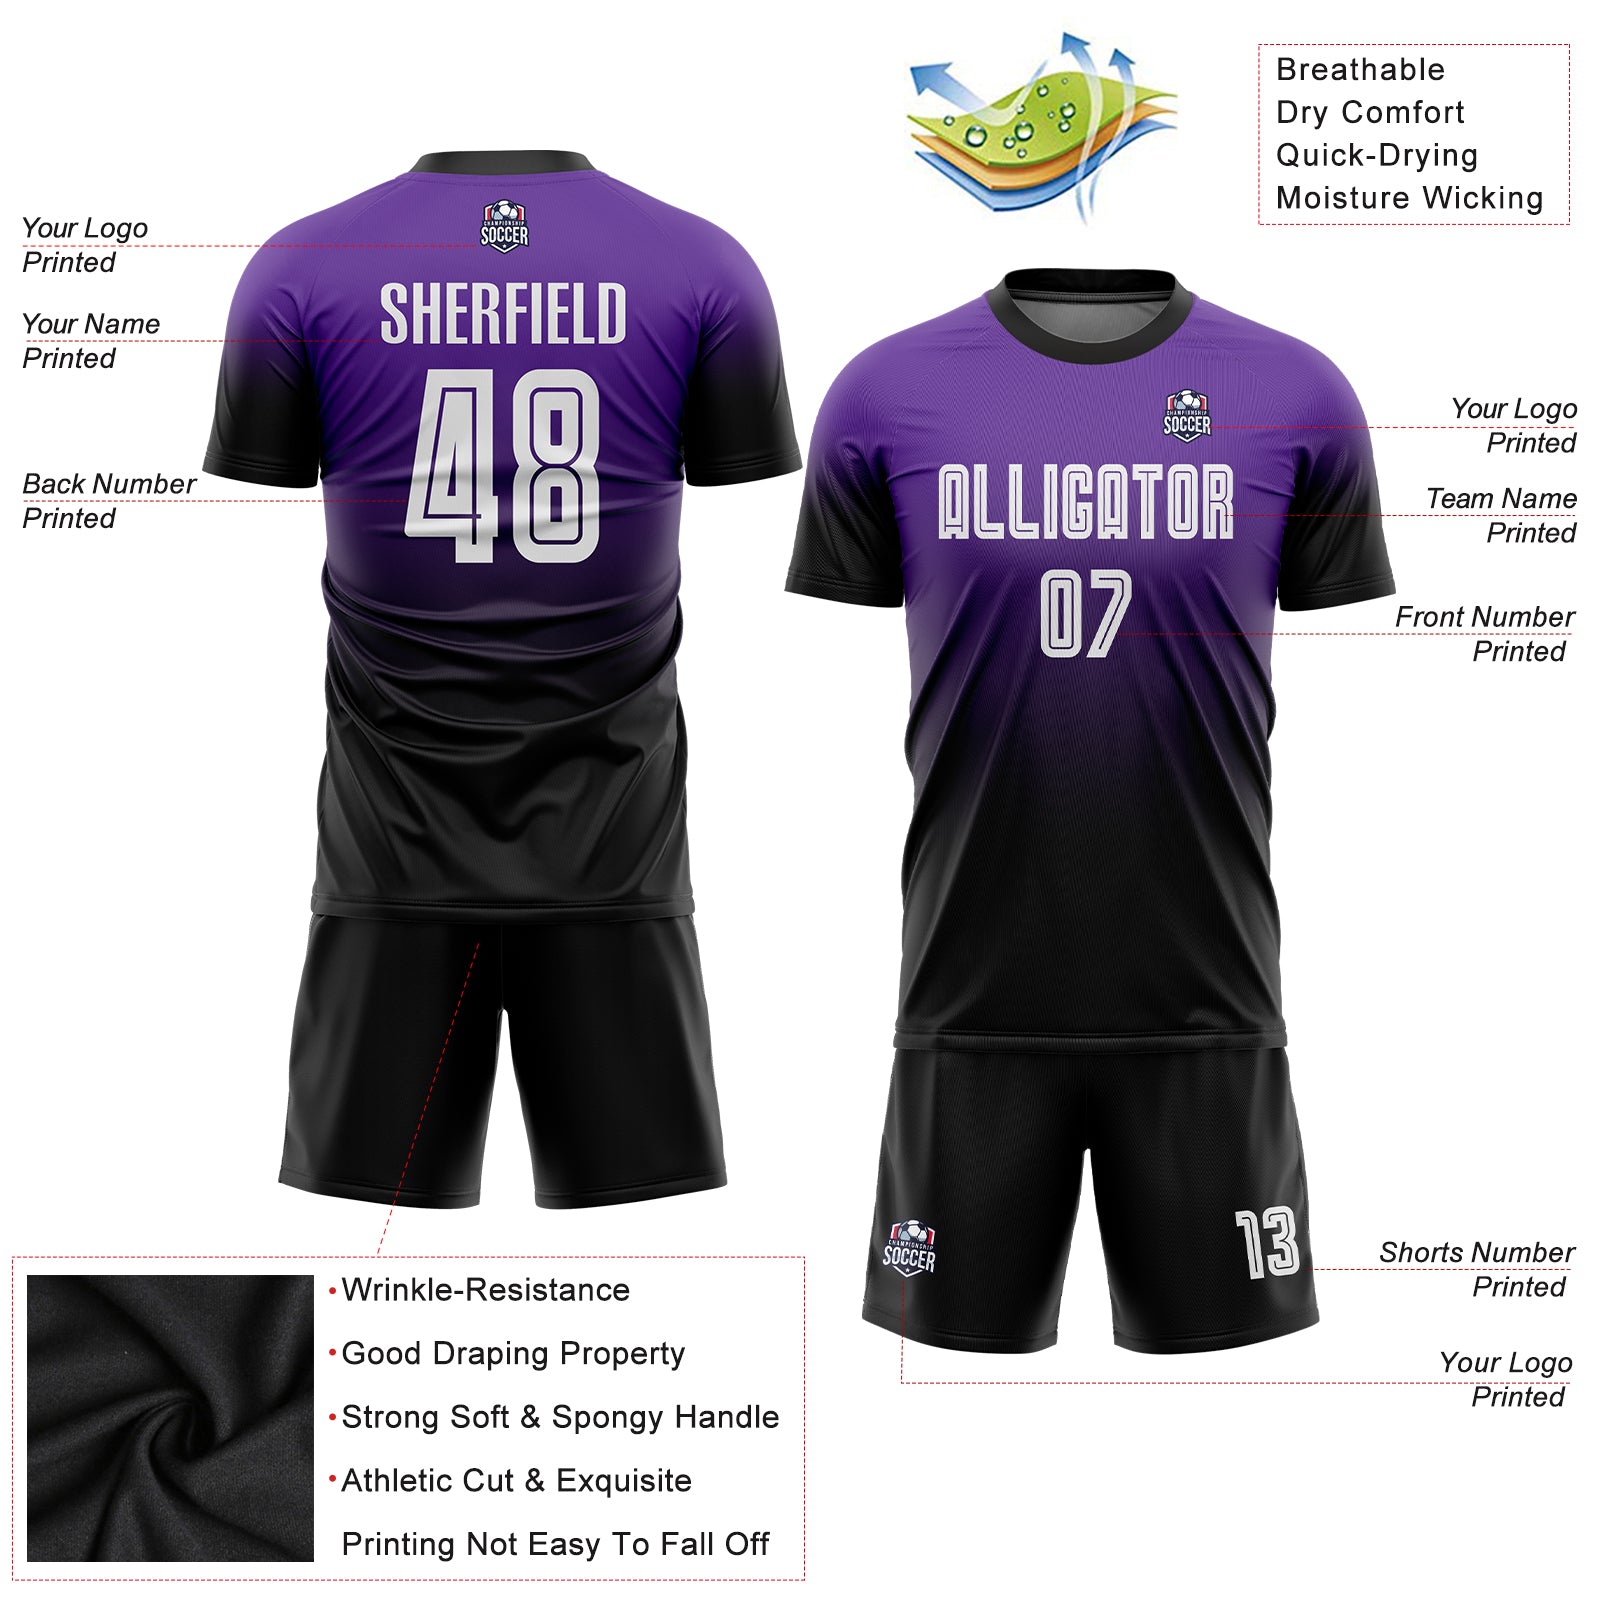 FANSIDEA Custom Purple White-Black Sublimation Fade Fashion Soccer Uniform Jersey Men's Size:2S